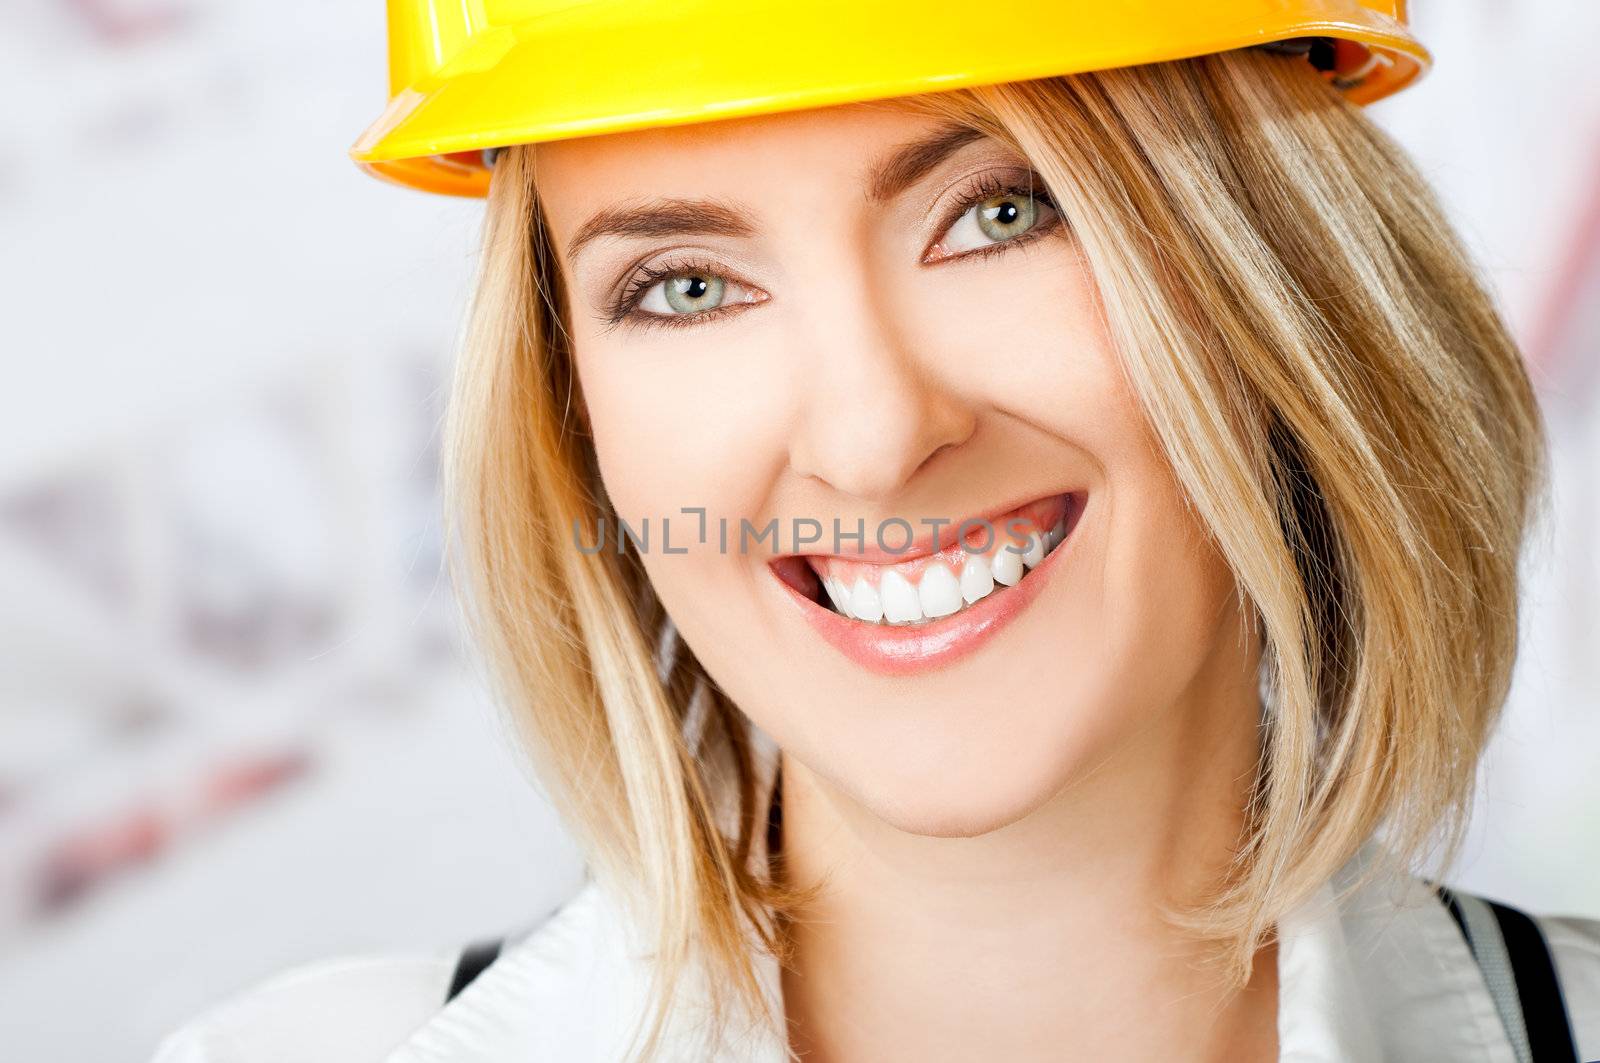 Portrait of beautiful smiling woman wearing yellow hardhat, looking at camera